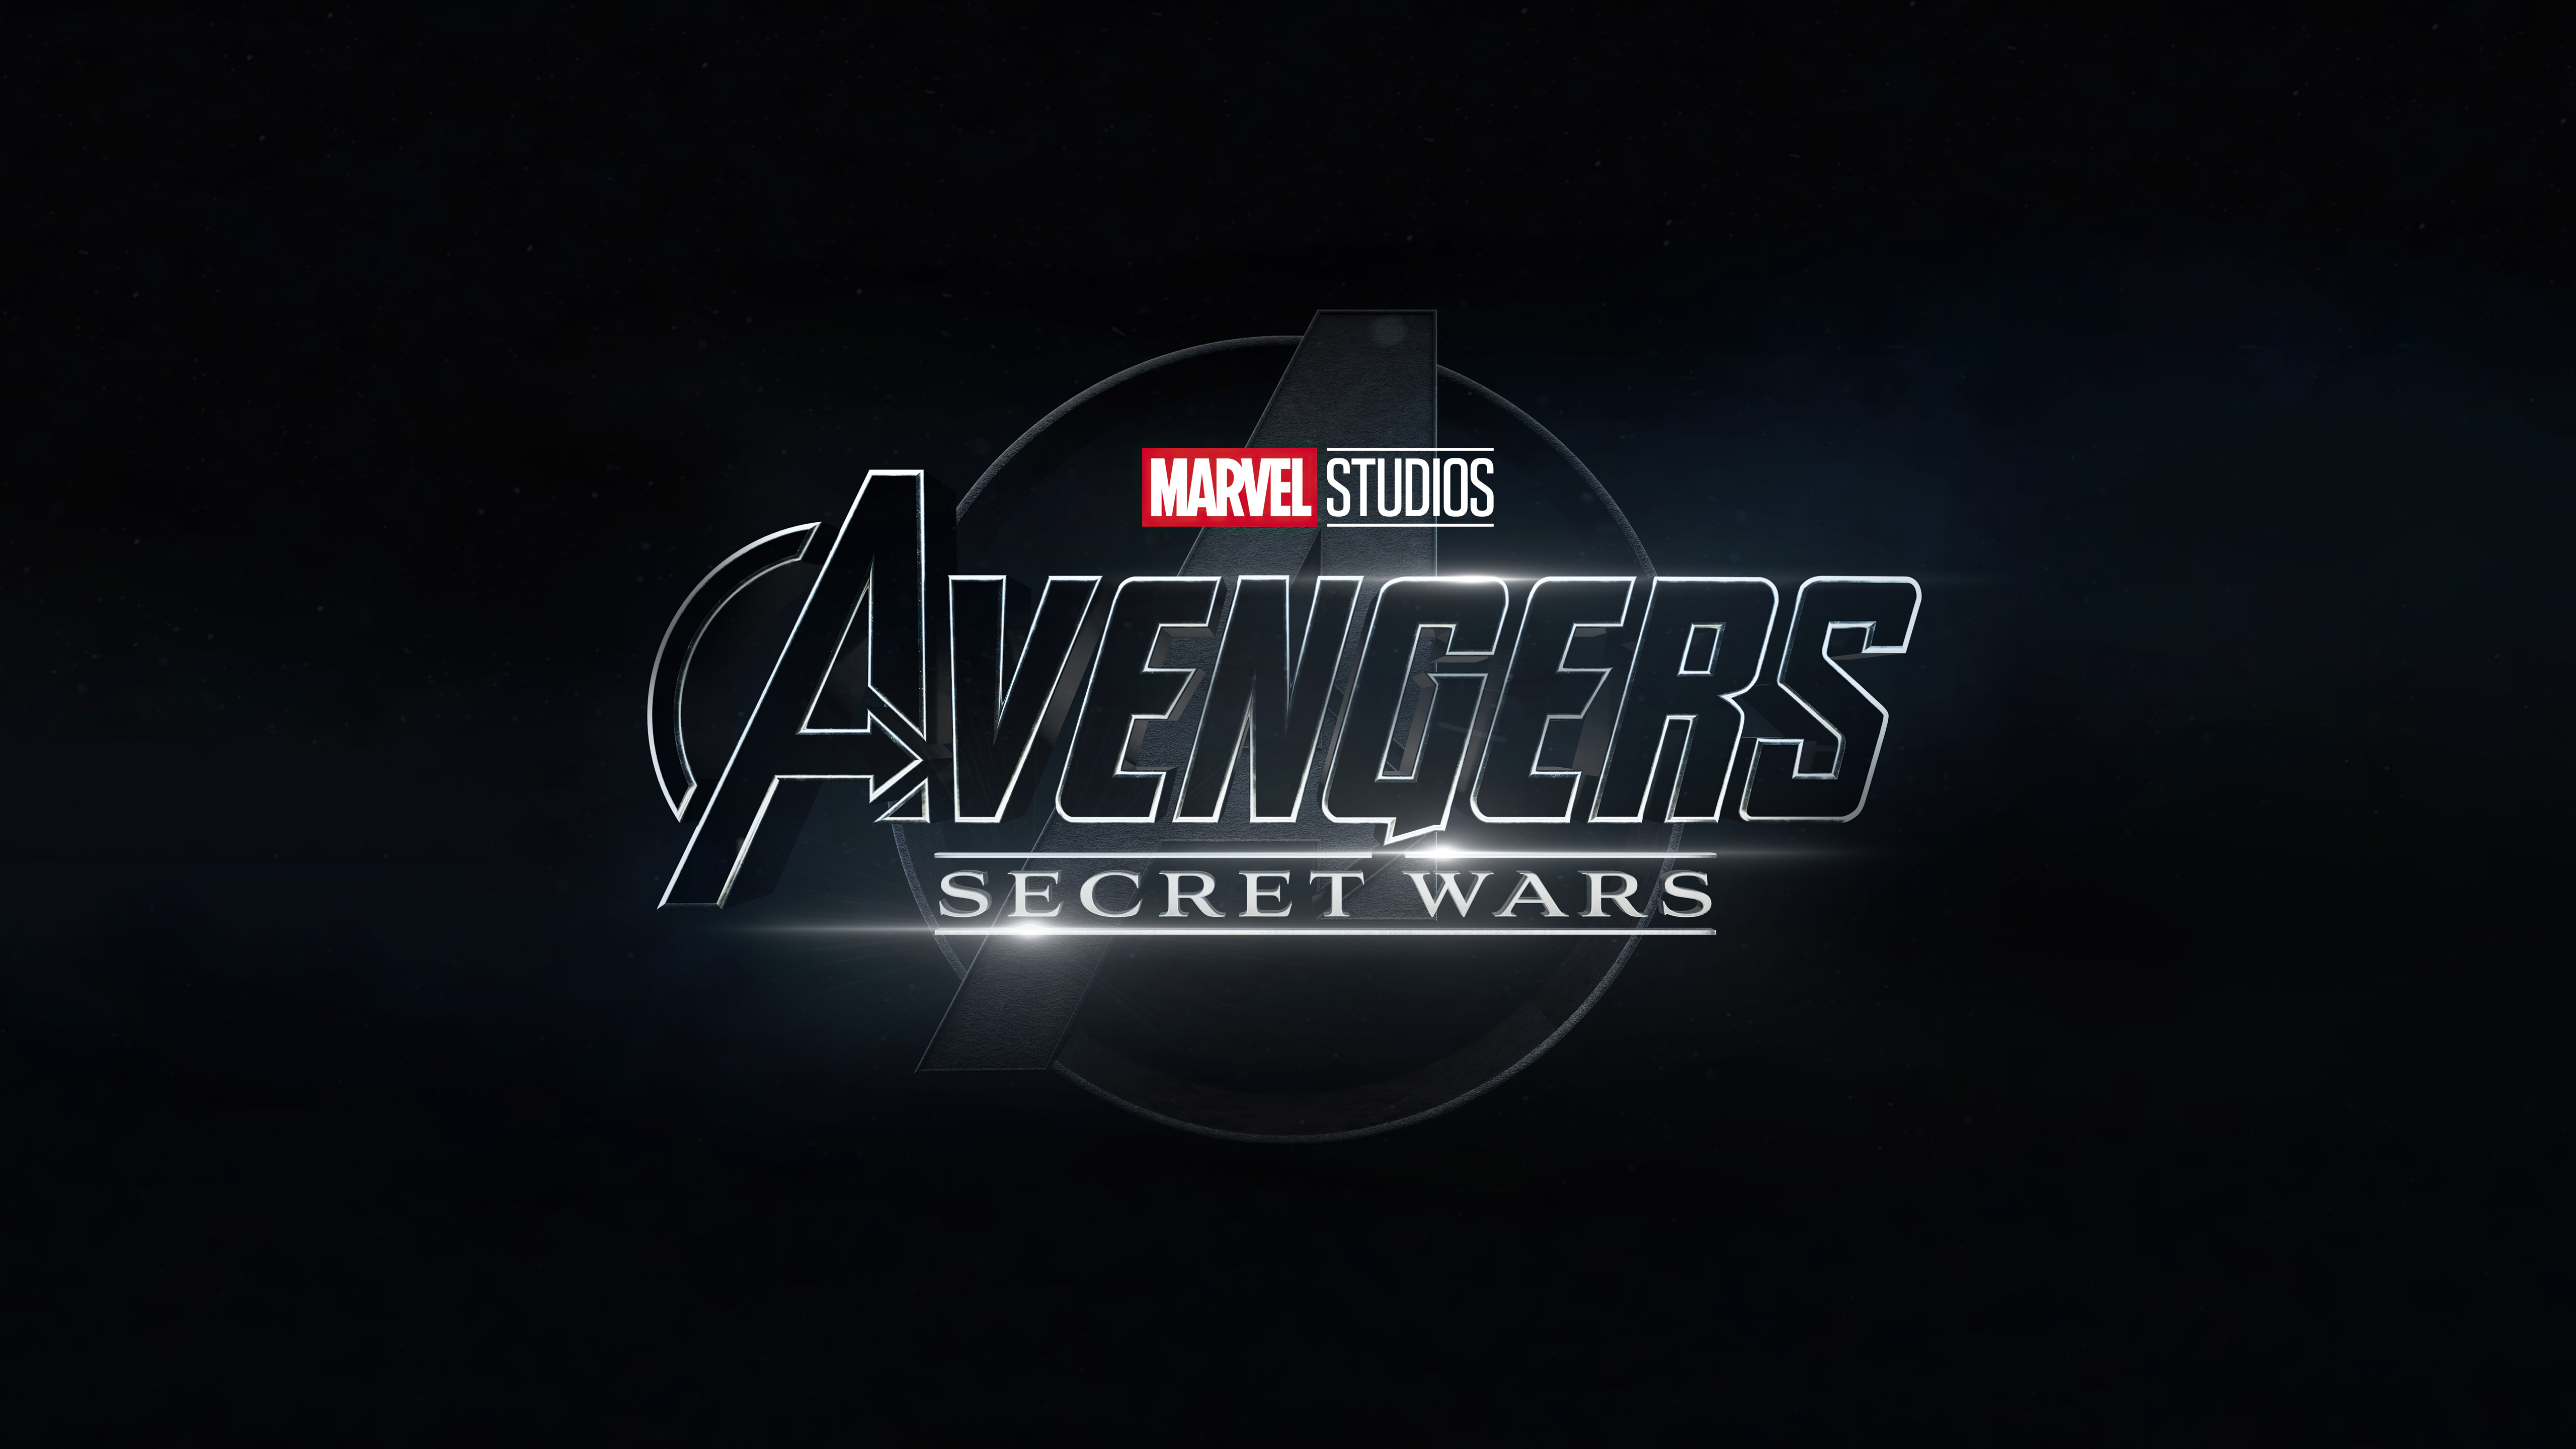 Avengers: Secret Wars HD Wallpaper and Background